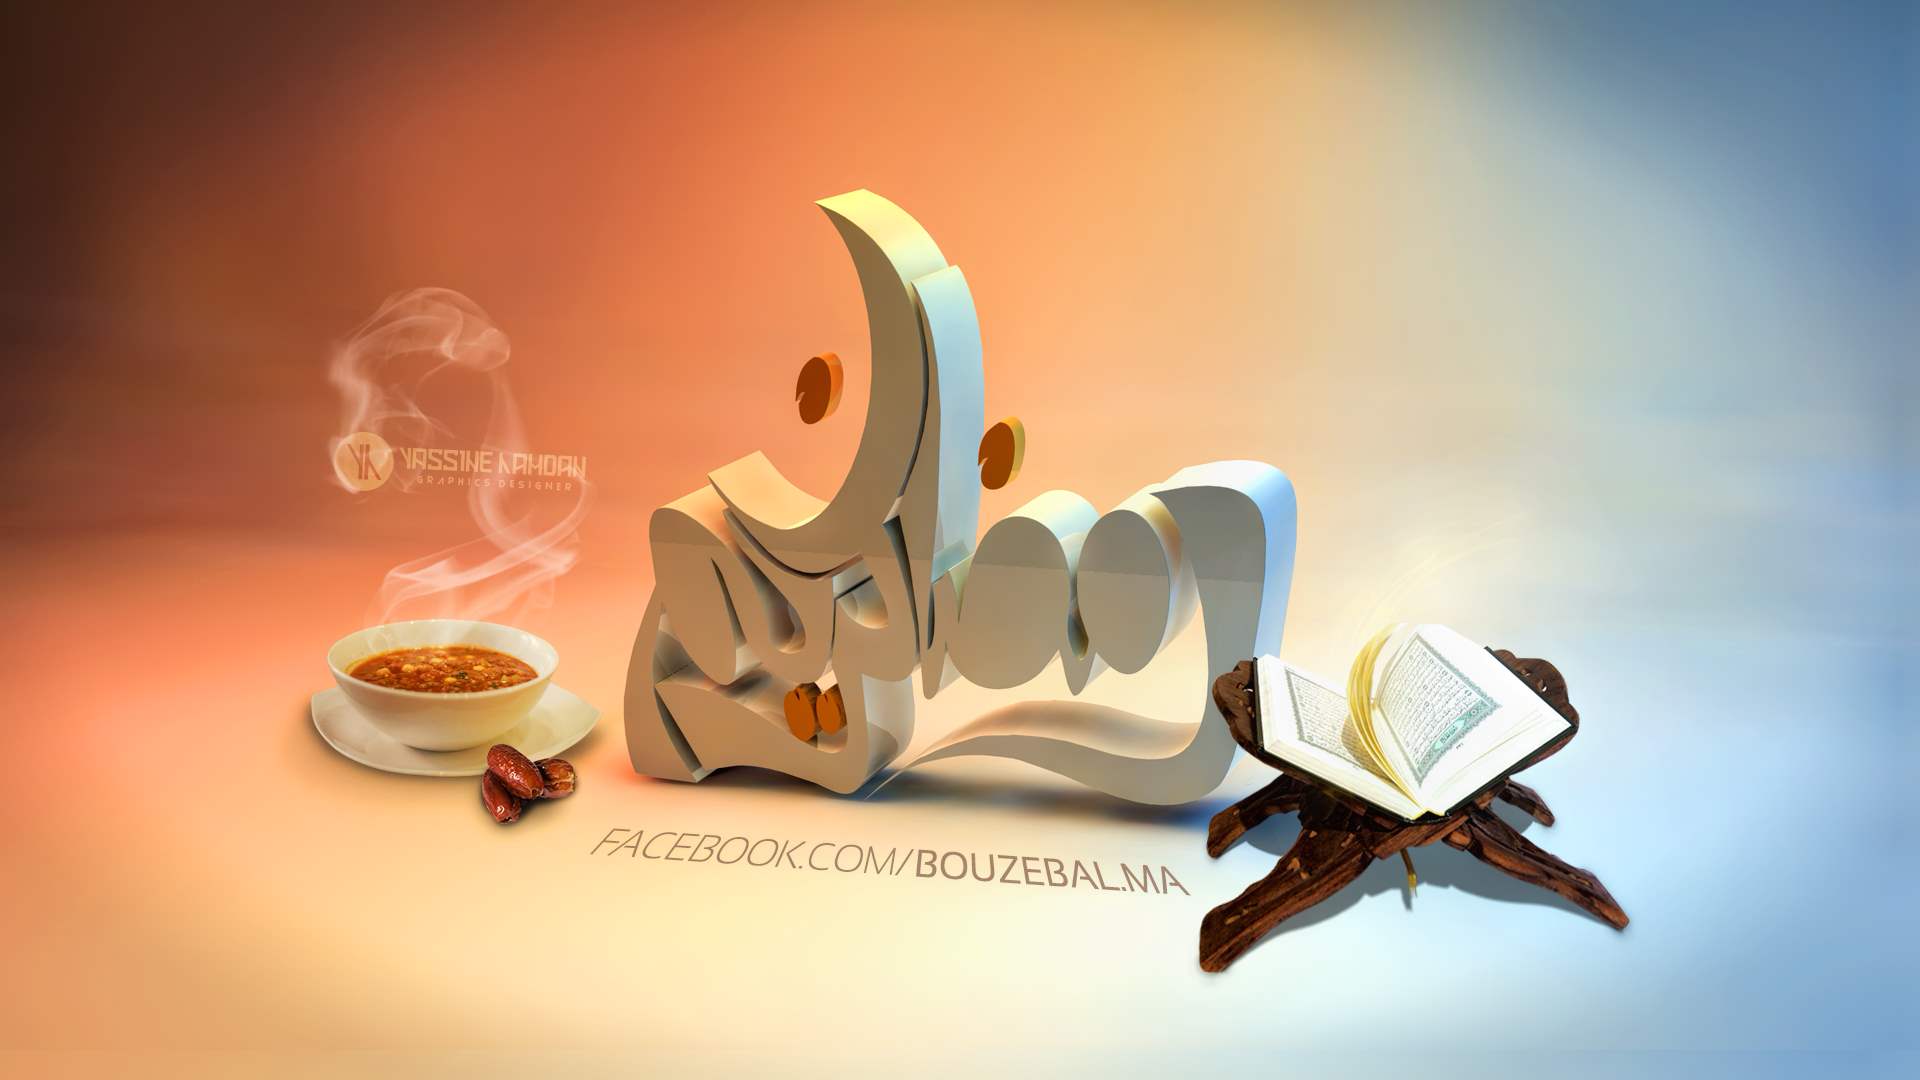 Collection Of Ramadan Mubarak HD Wallpaper